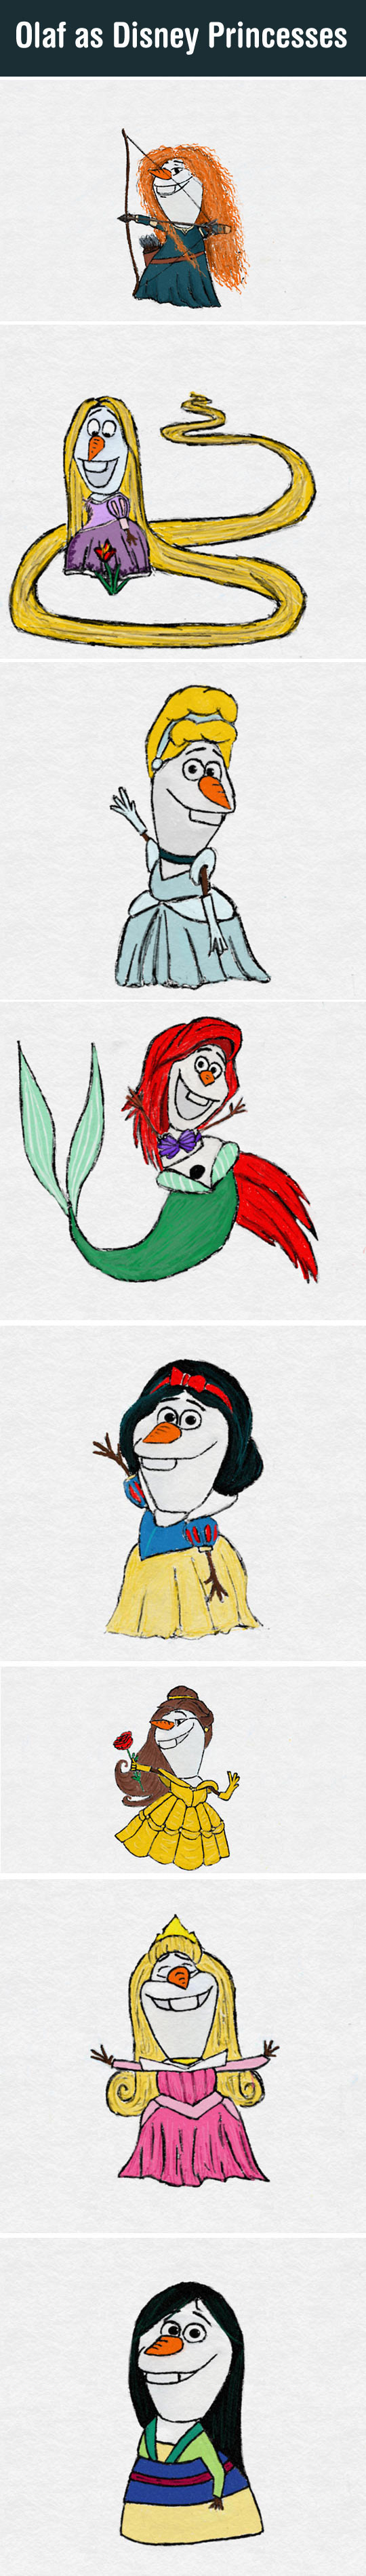 If Olaf Was Actually A Disney Princess